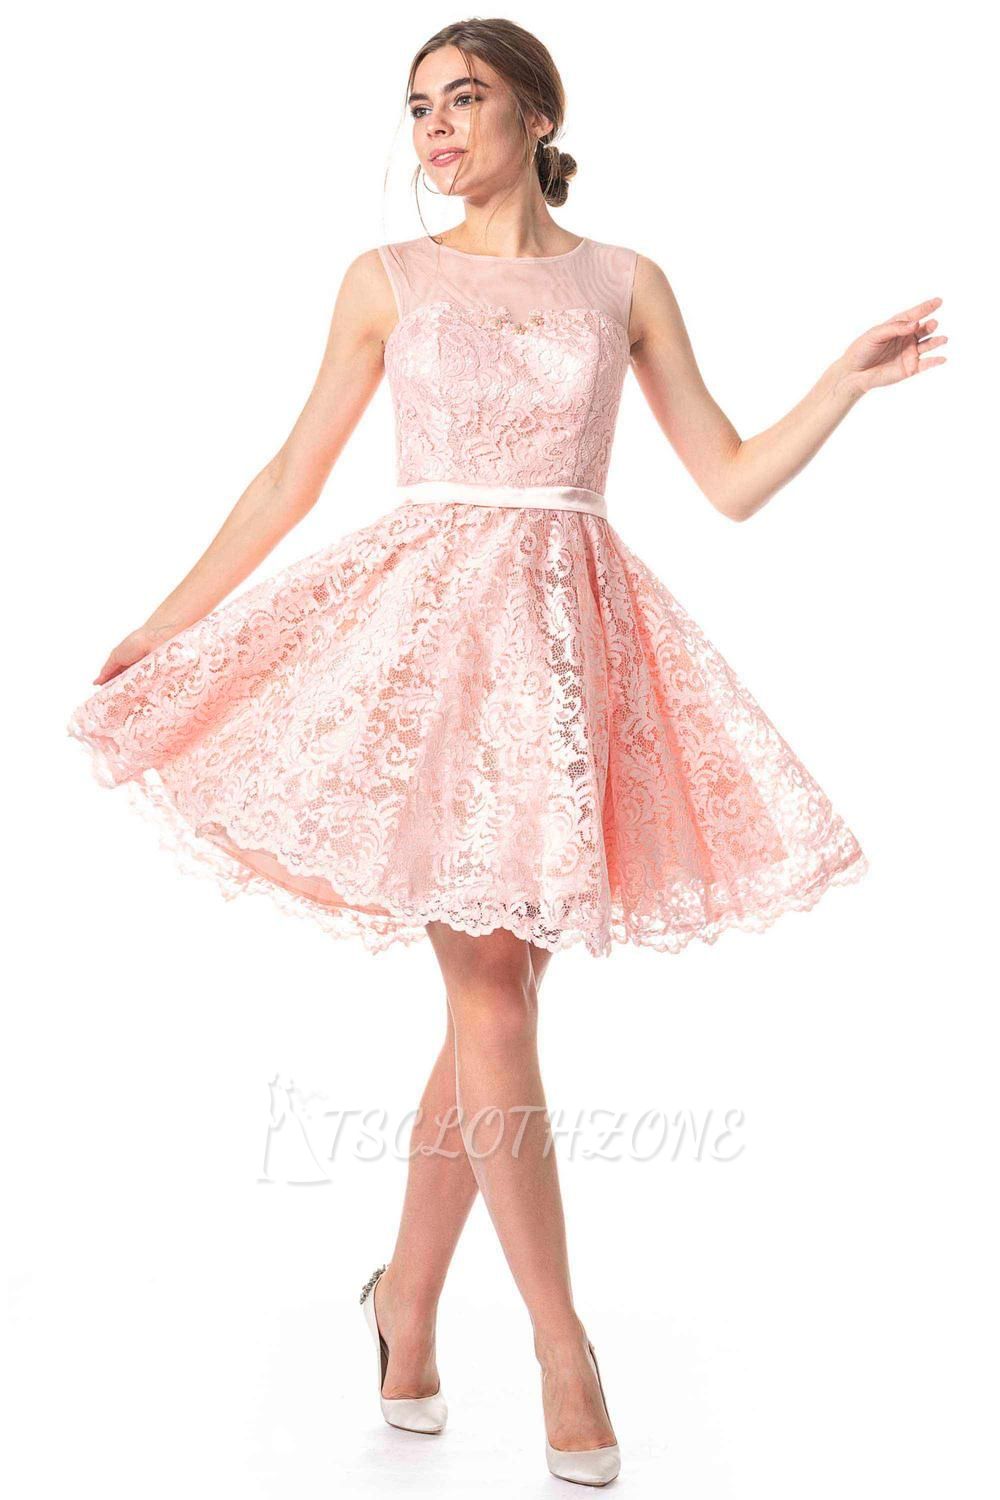 Lovely Jewel Neck Sleeveless Floral Lace Short Party Dress Formal Wear Dress